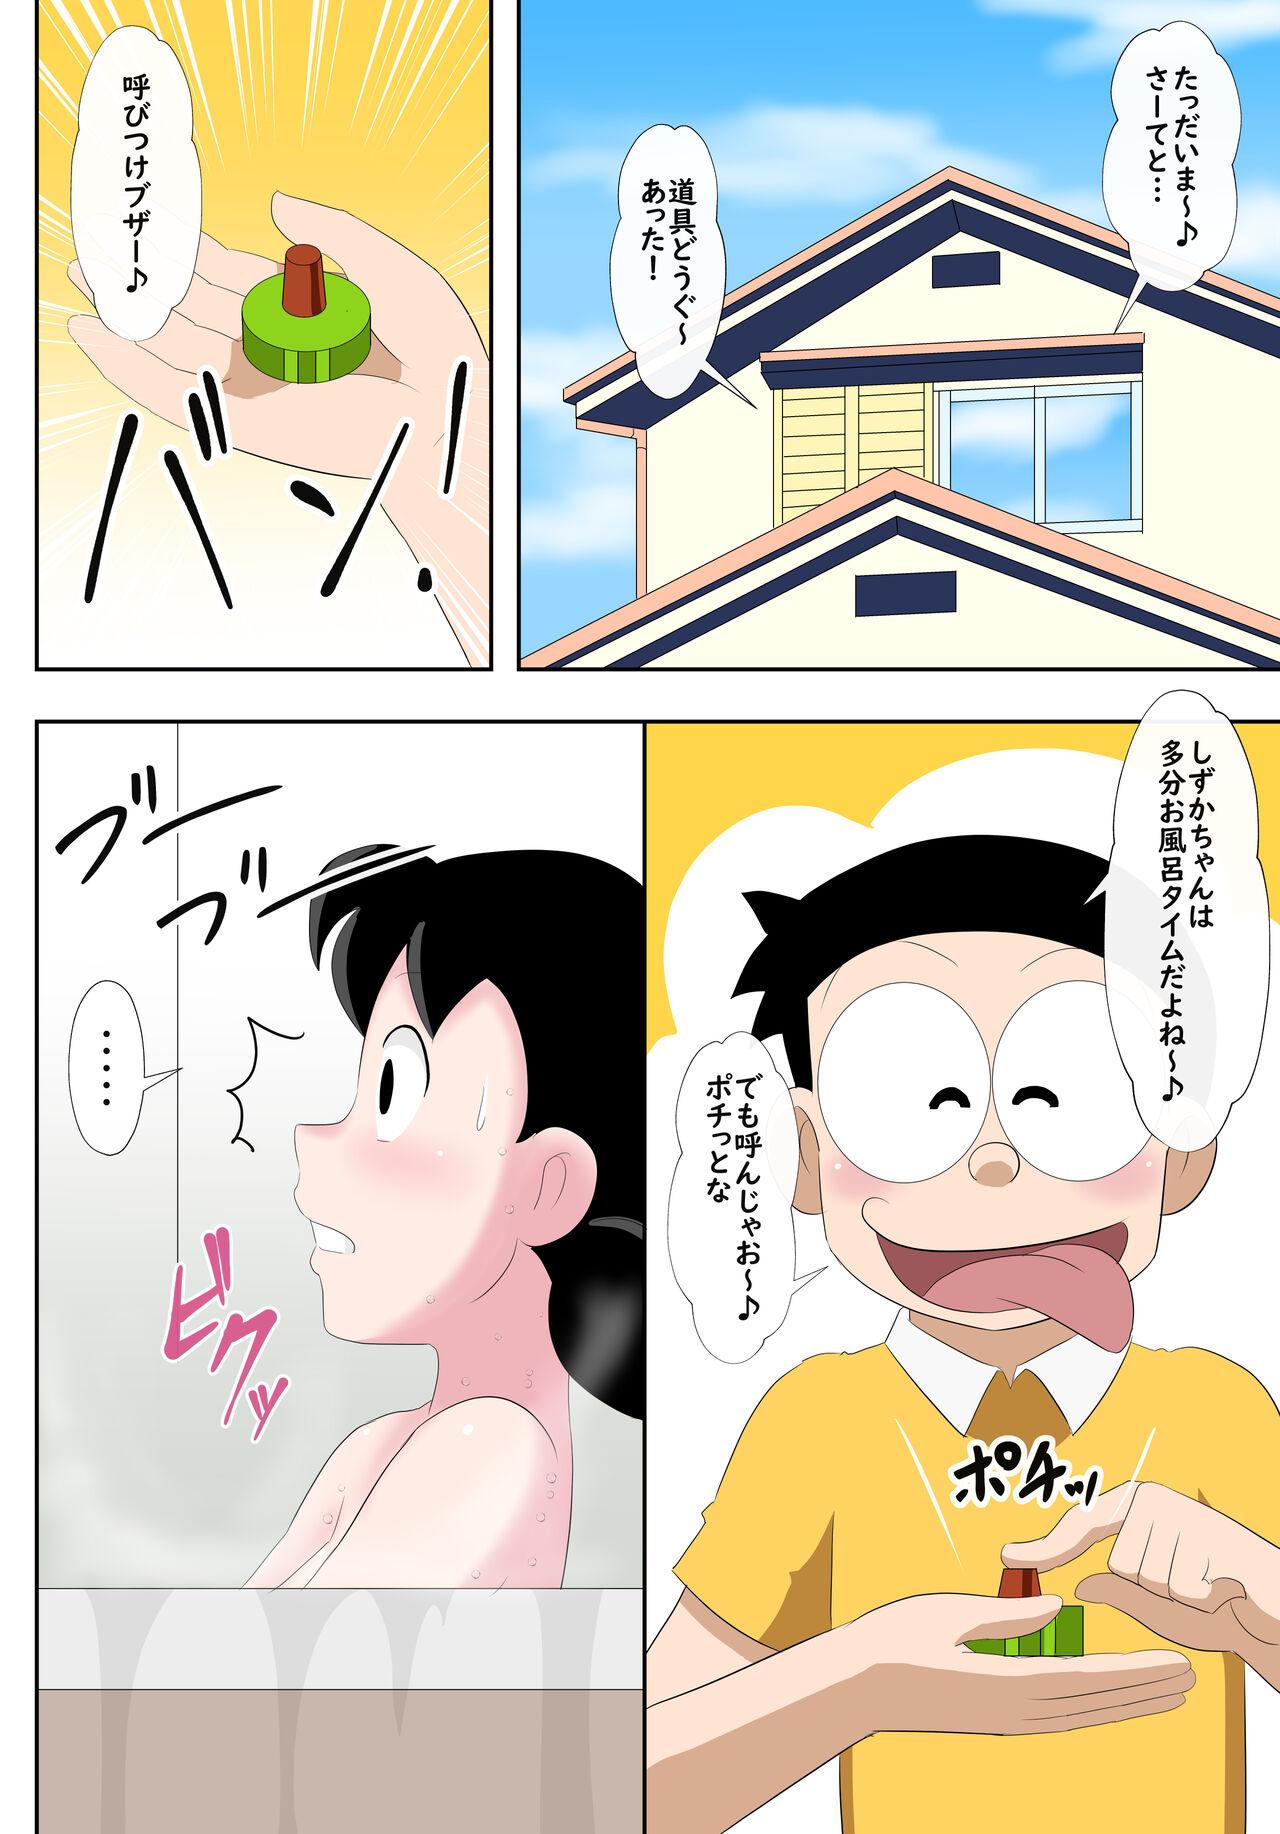 [Circle Takaya] if -sizuka- 7 (Doraemon) 12